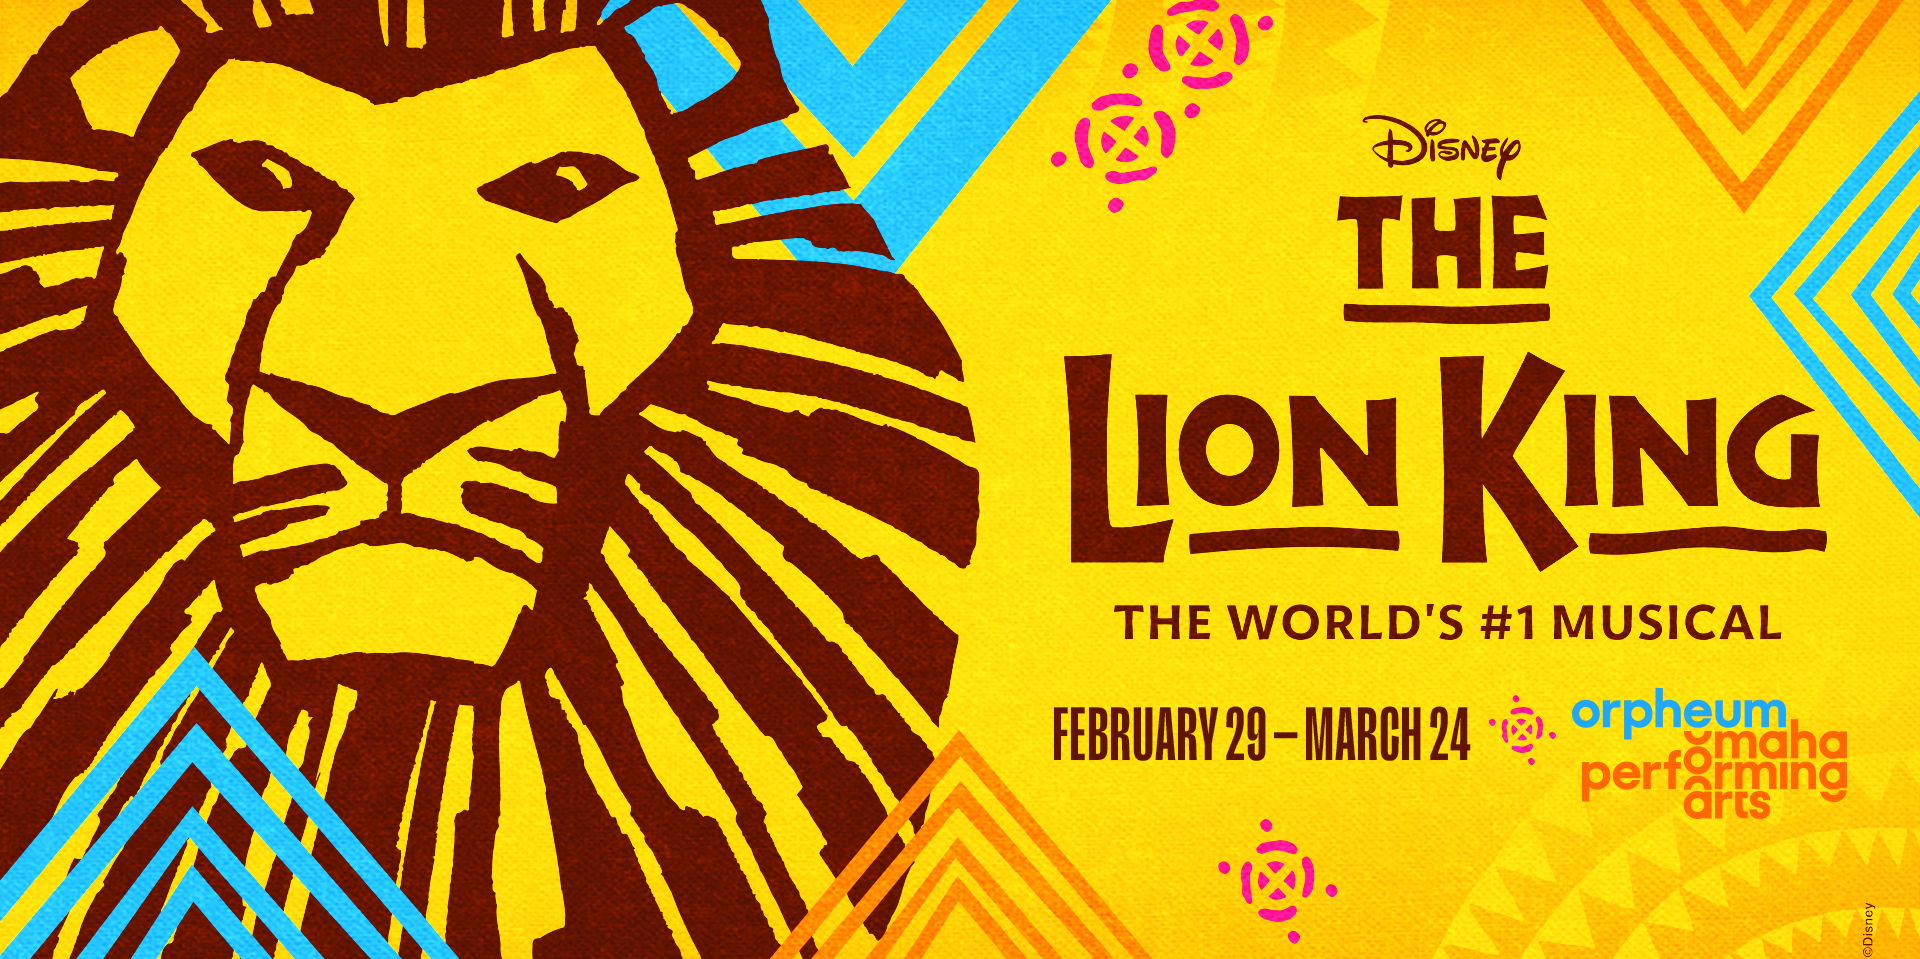 Disney's THE LION KING promotional image